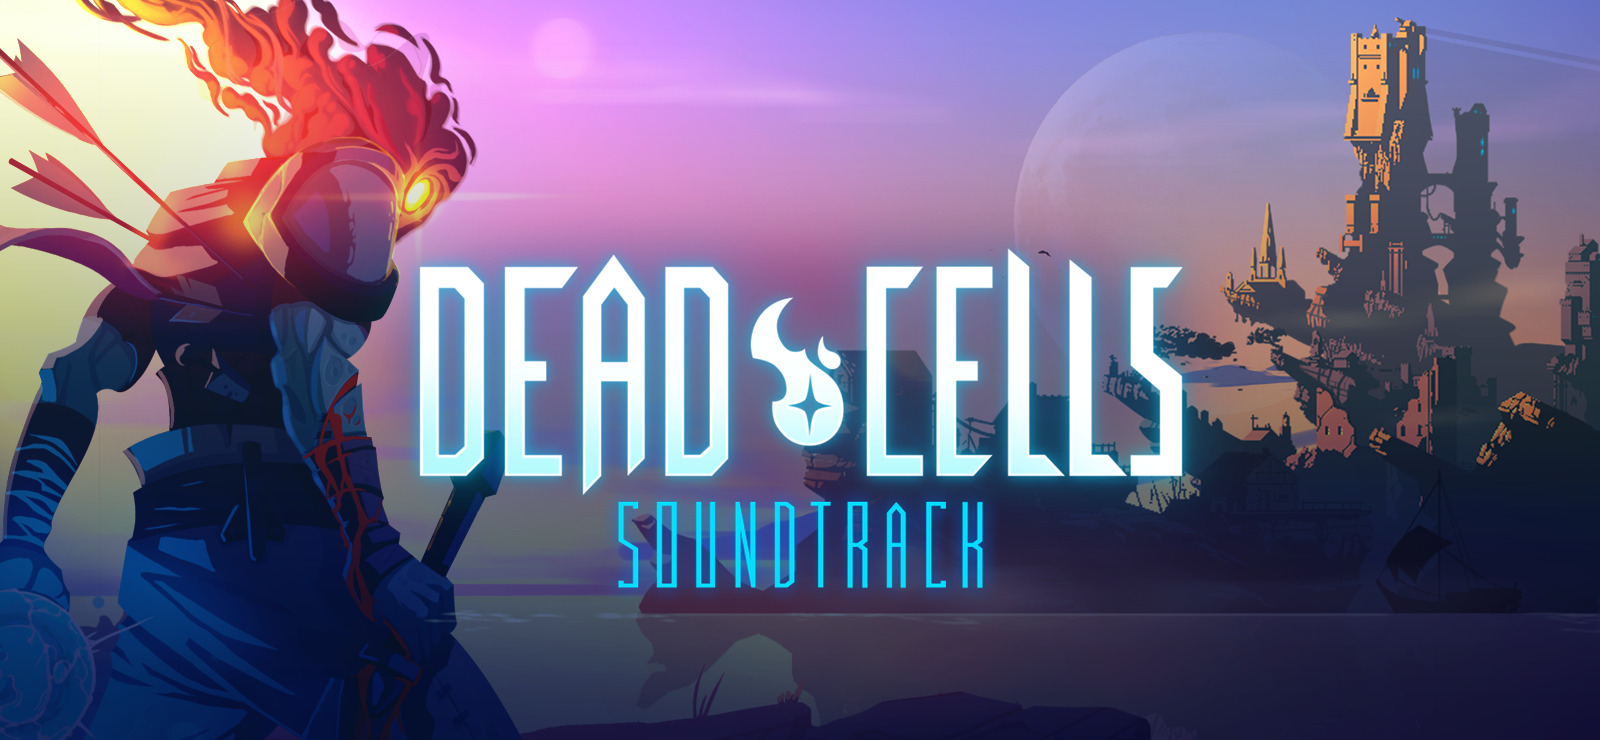 dead cells trailer song